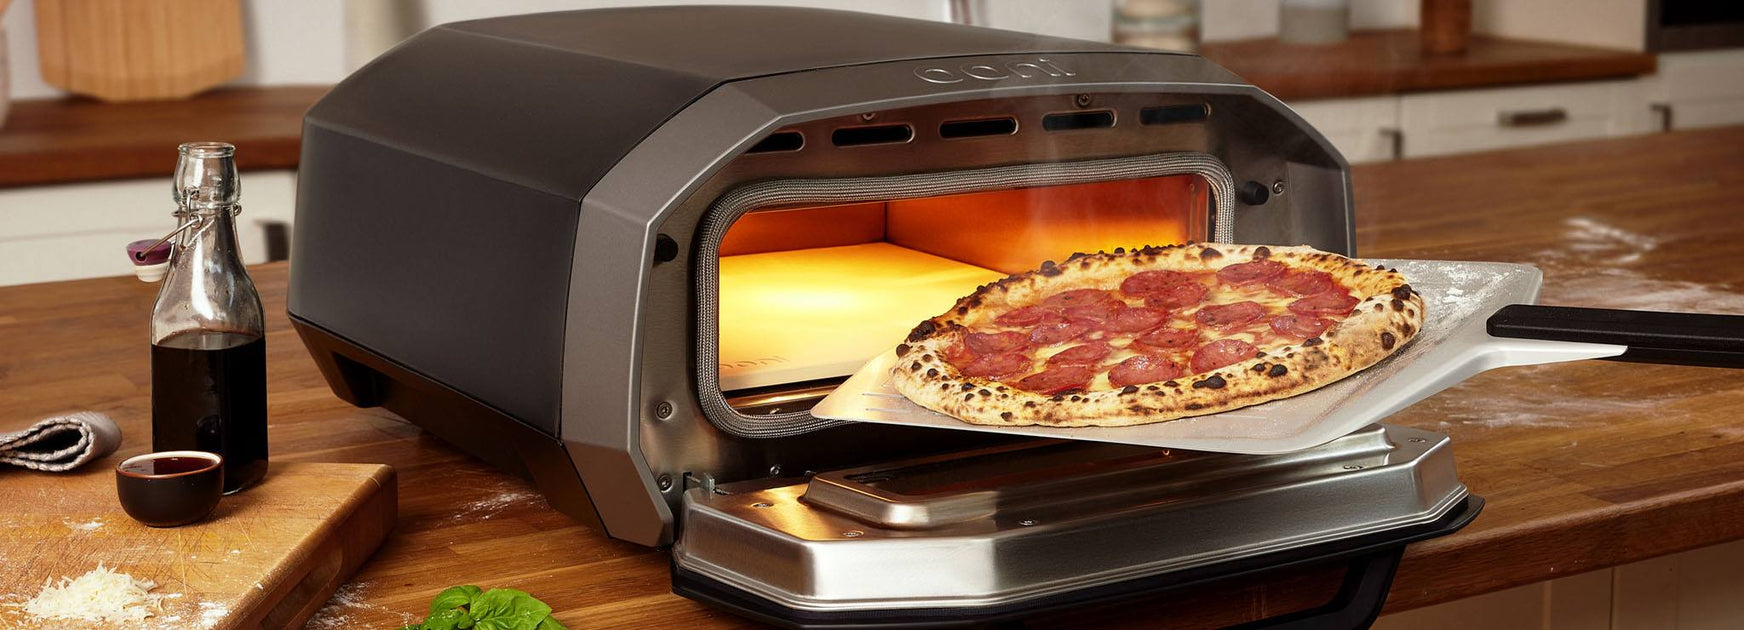 automatic pizza maker adjustable temperature control